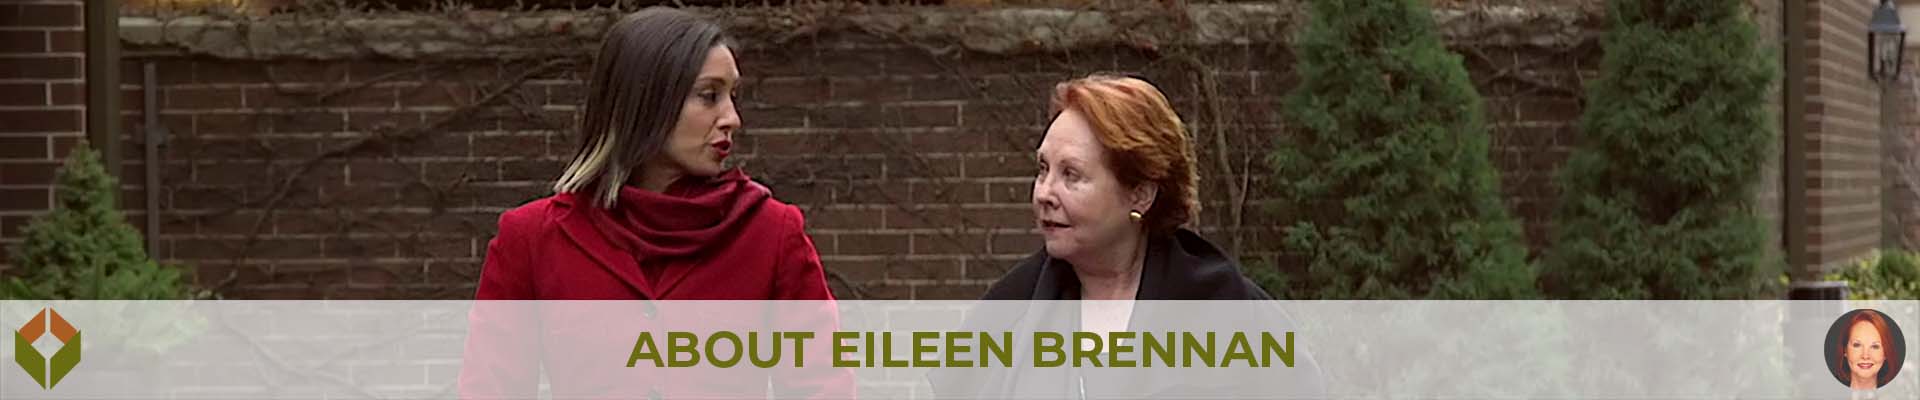 About Eileen Brennan - Chicago Real Estate Agent